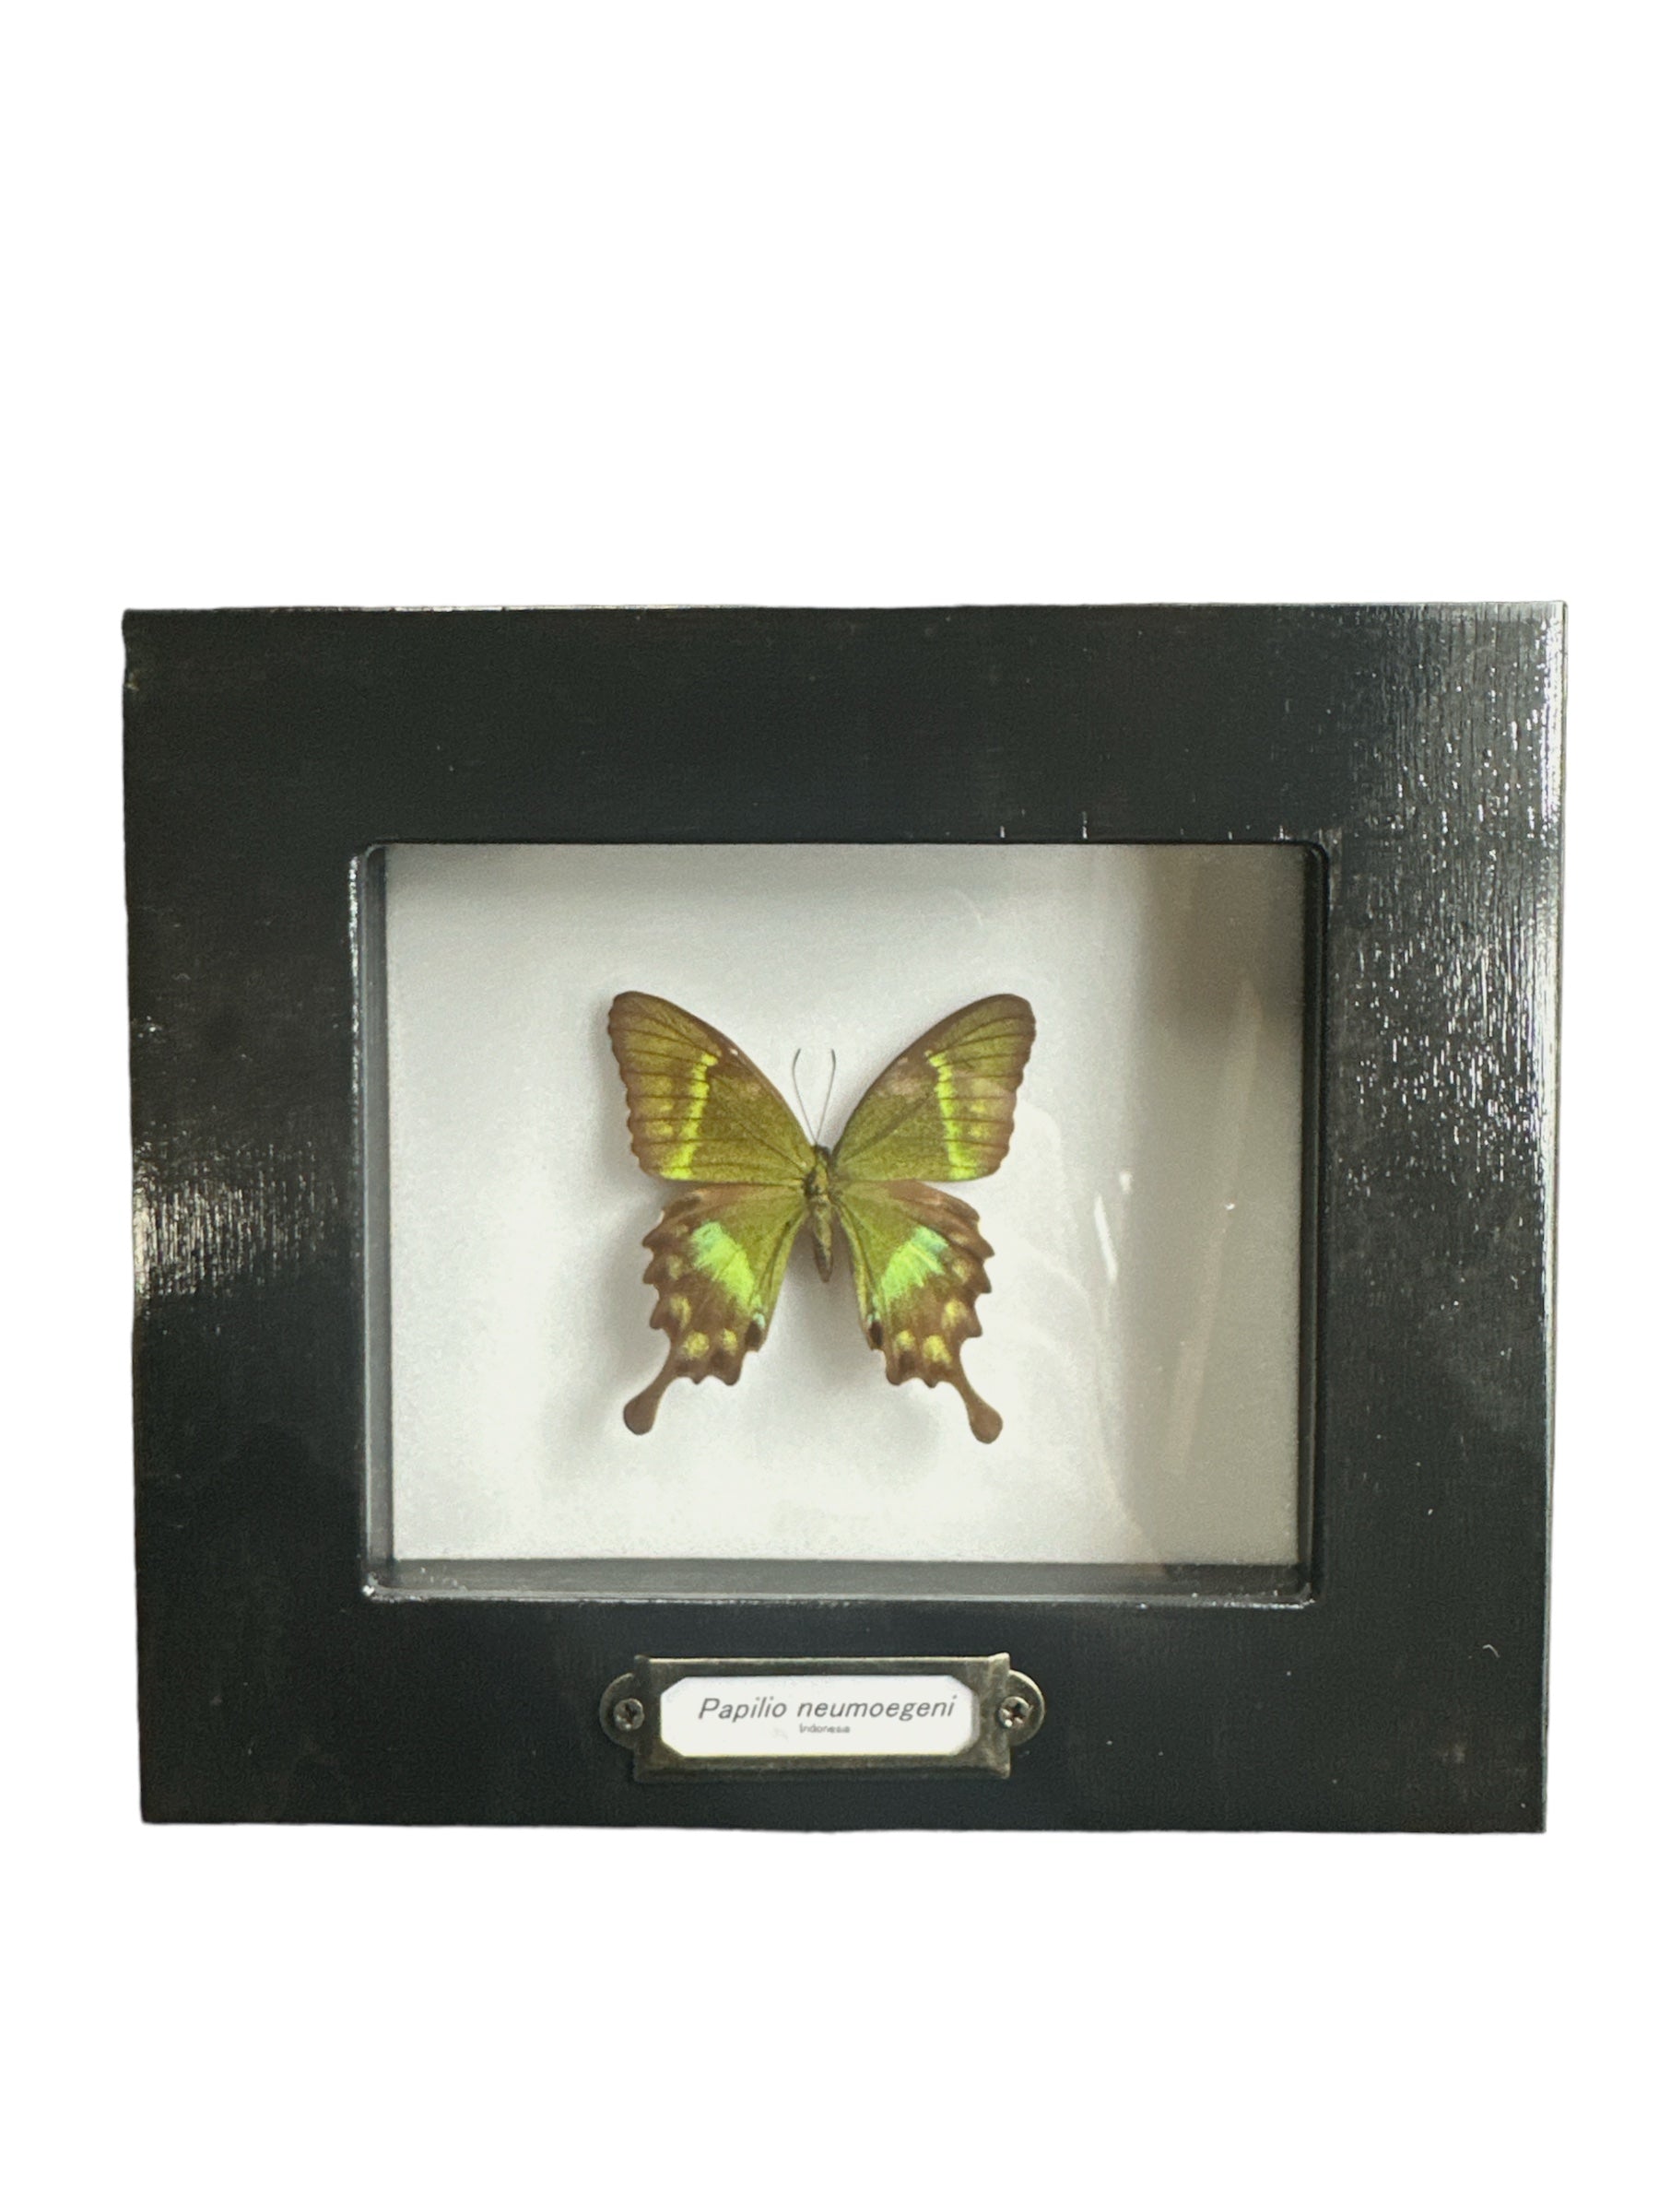 Green Swallowtail Butterfly (Papilio neumogeni) - 4x5" Frame